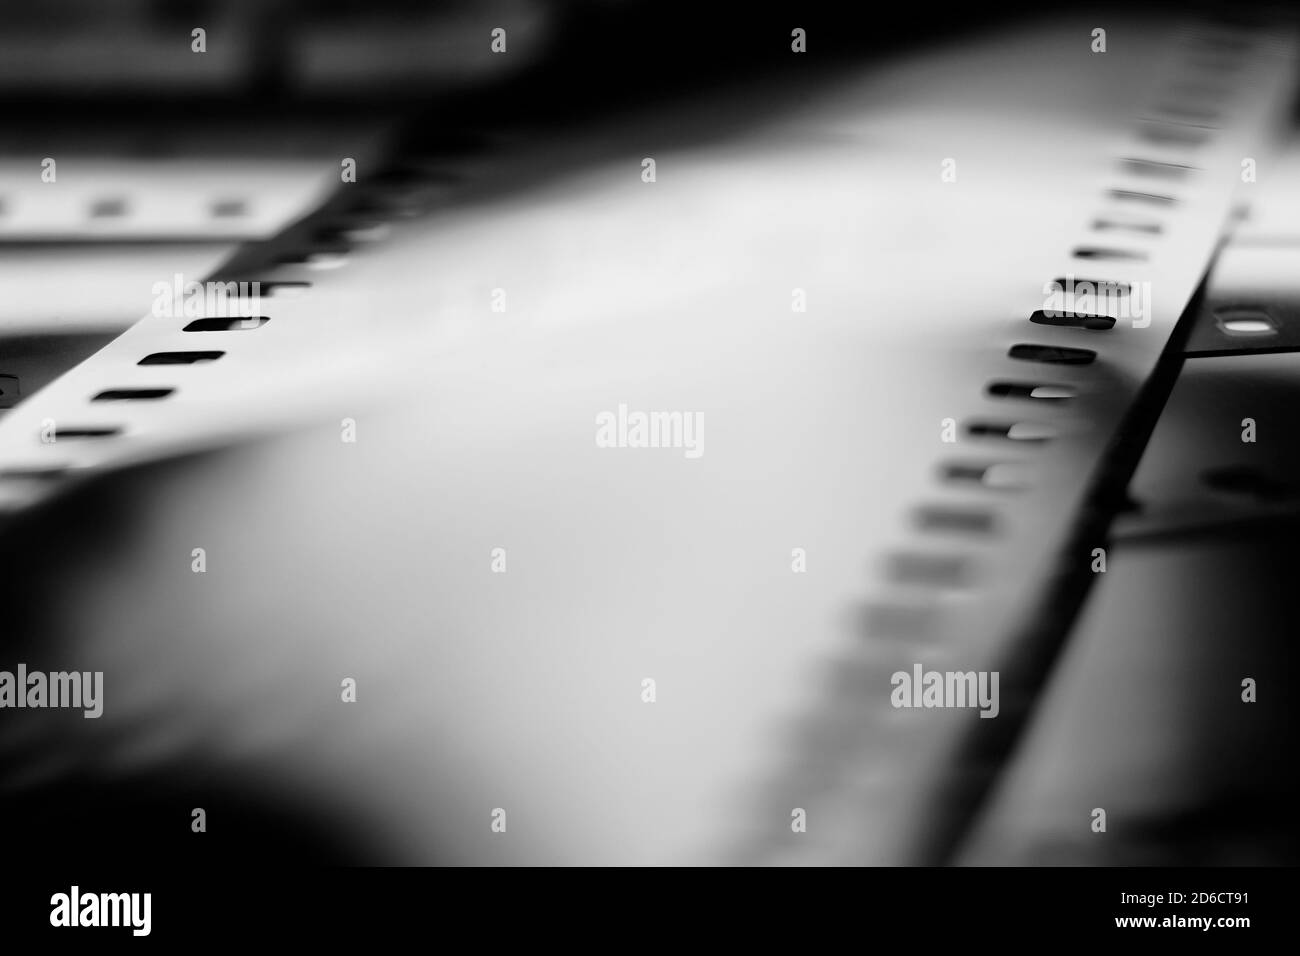 35mm negative photographic film in blur. Stock Photo